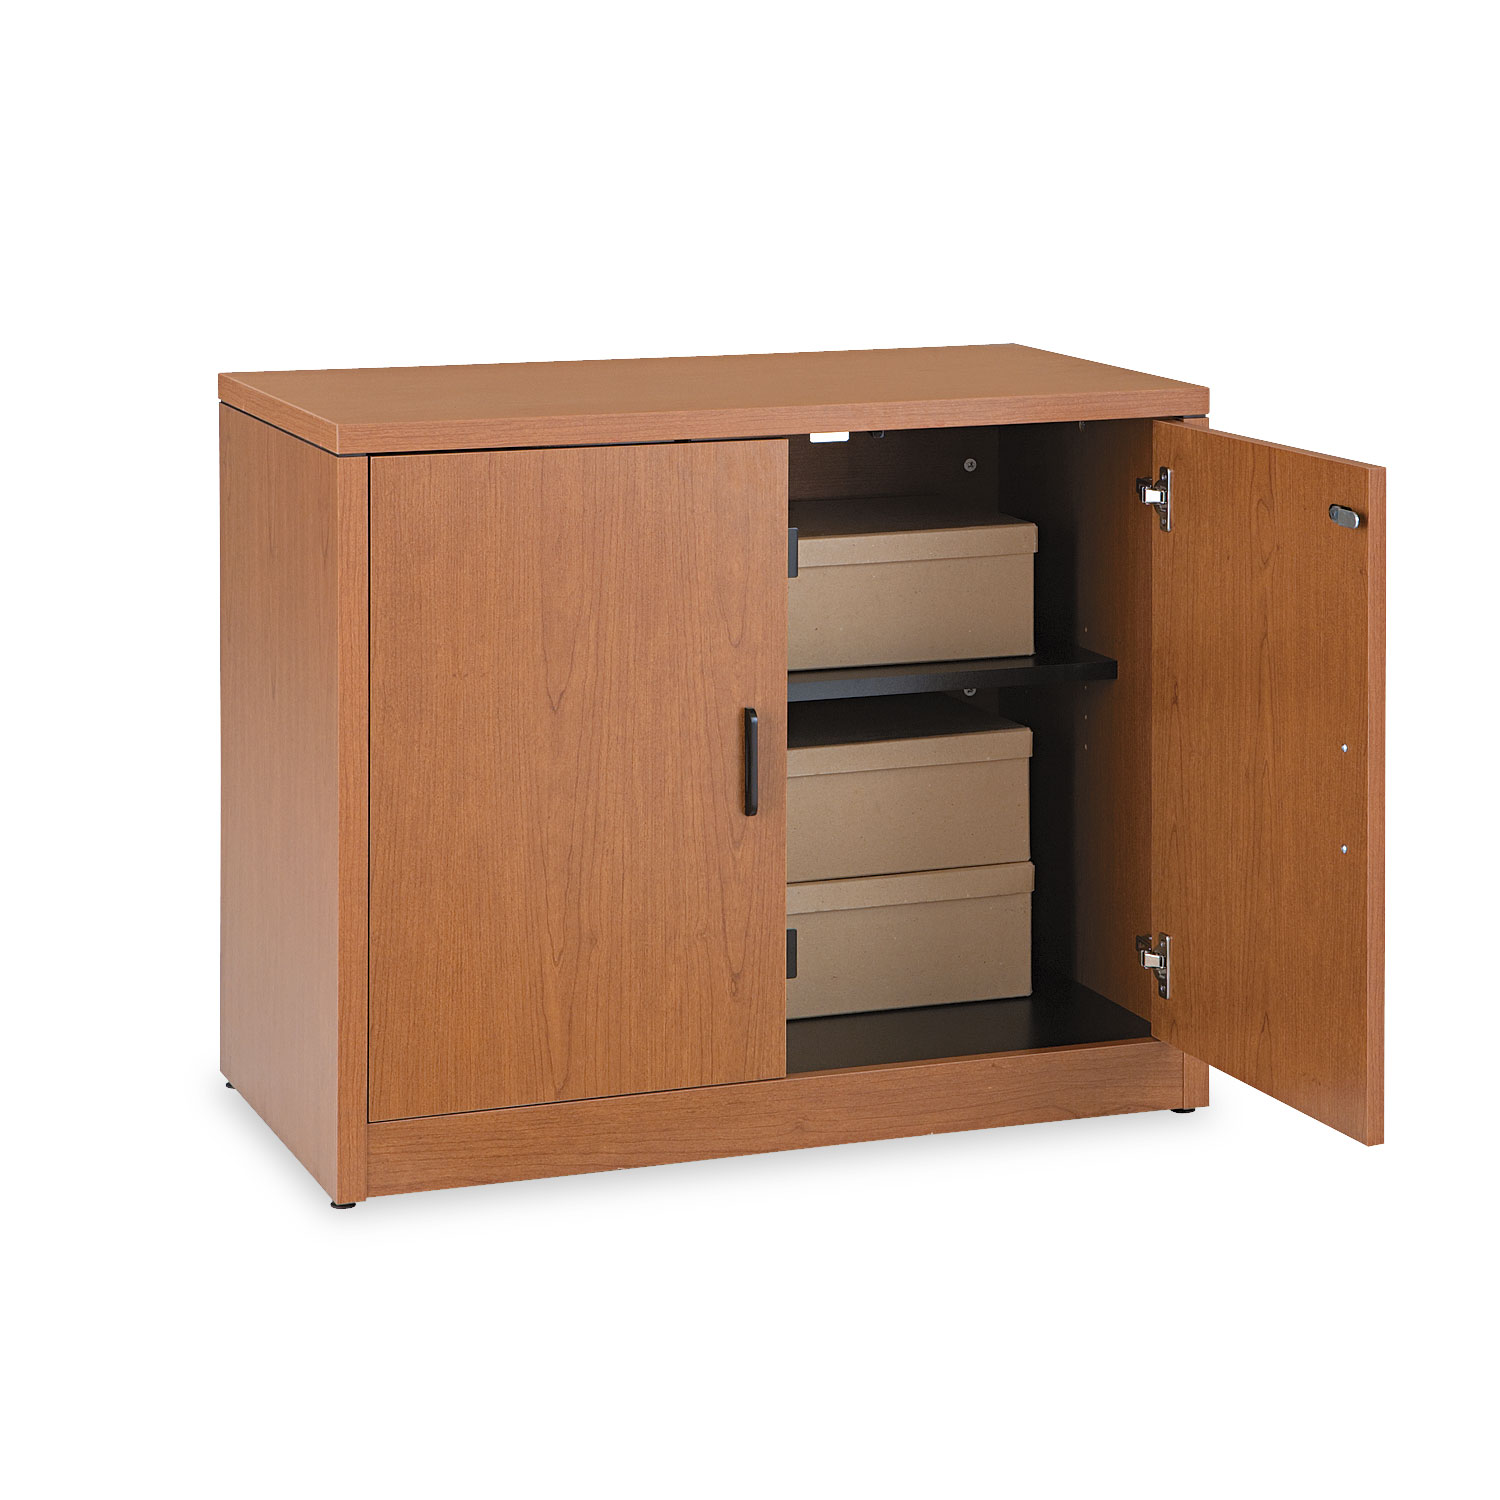  HON H105291.HH 10500 Series Storage Cabinet w/Doors, 36w x 20d x 29-1/2h, Bourbon Cherry (HON105291HH) 